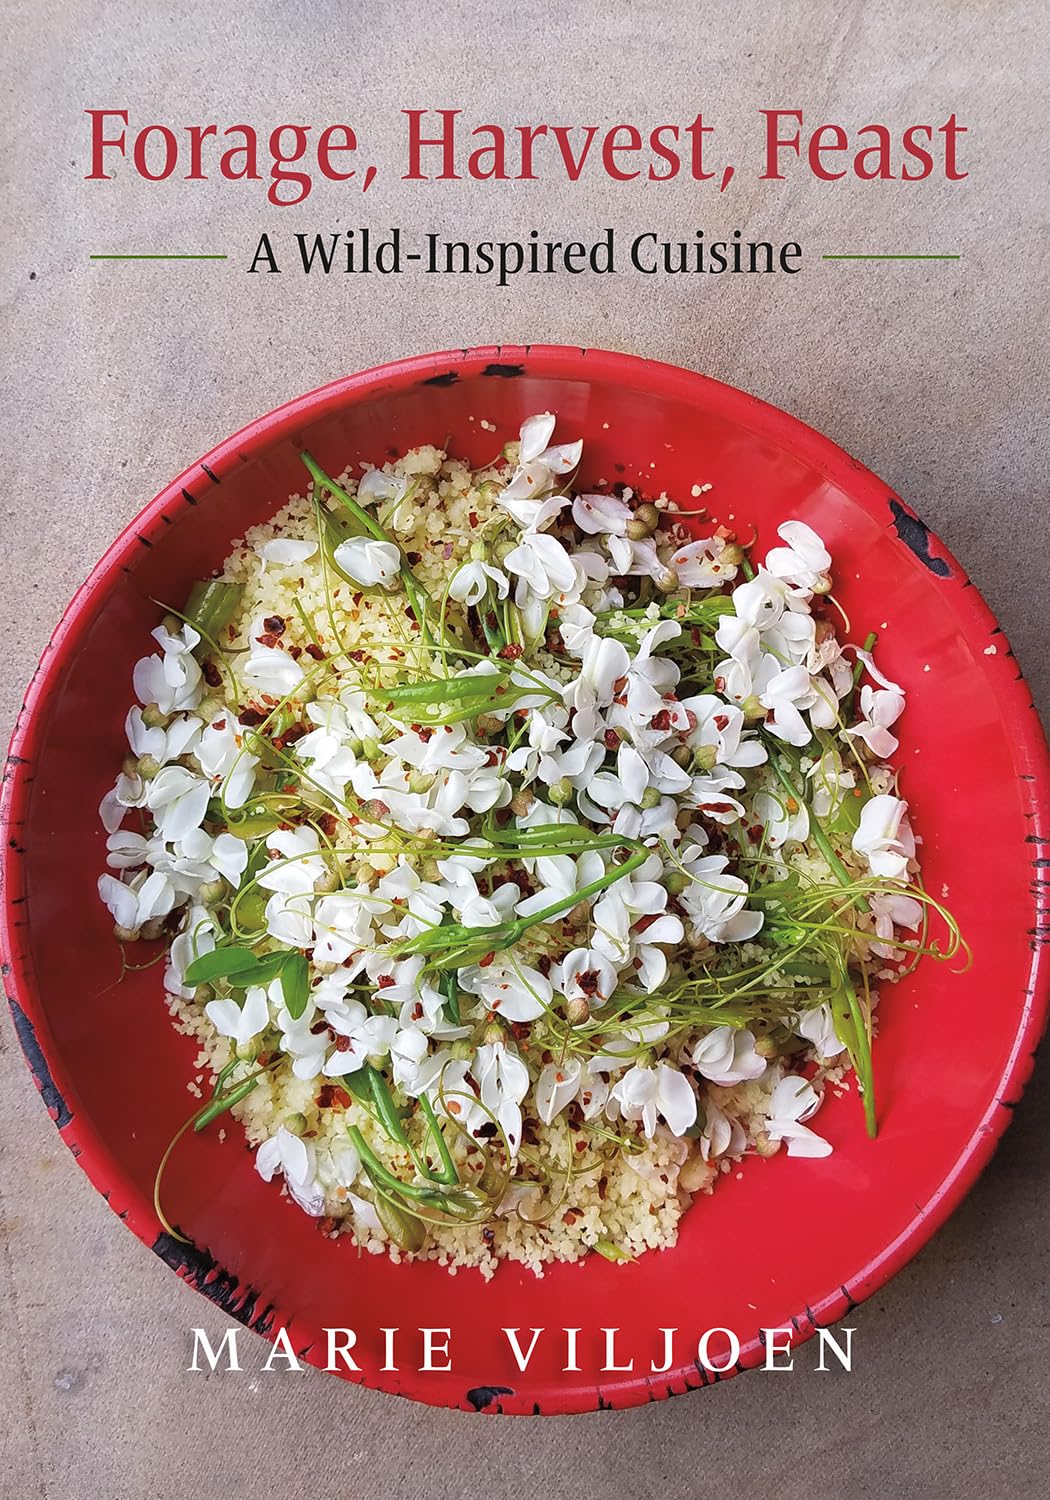 Forage, Harvest, Feast: A Wild-Inspired Cuisine (Marie Viljoen)